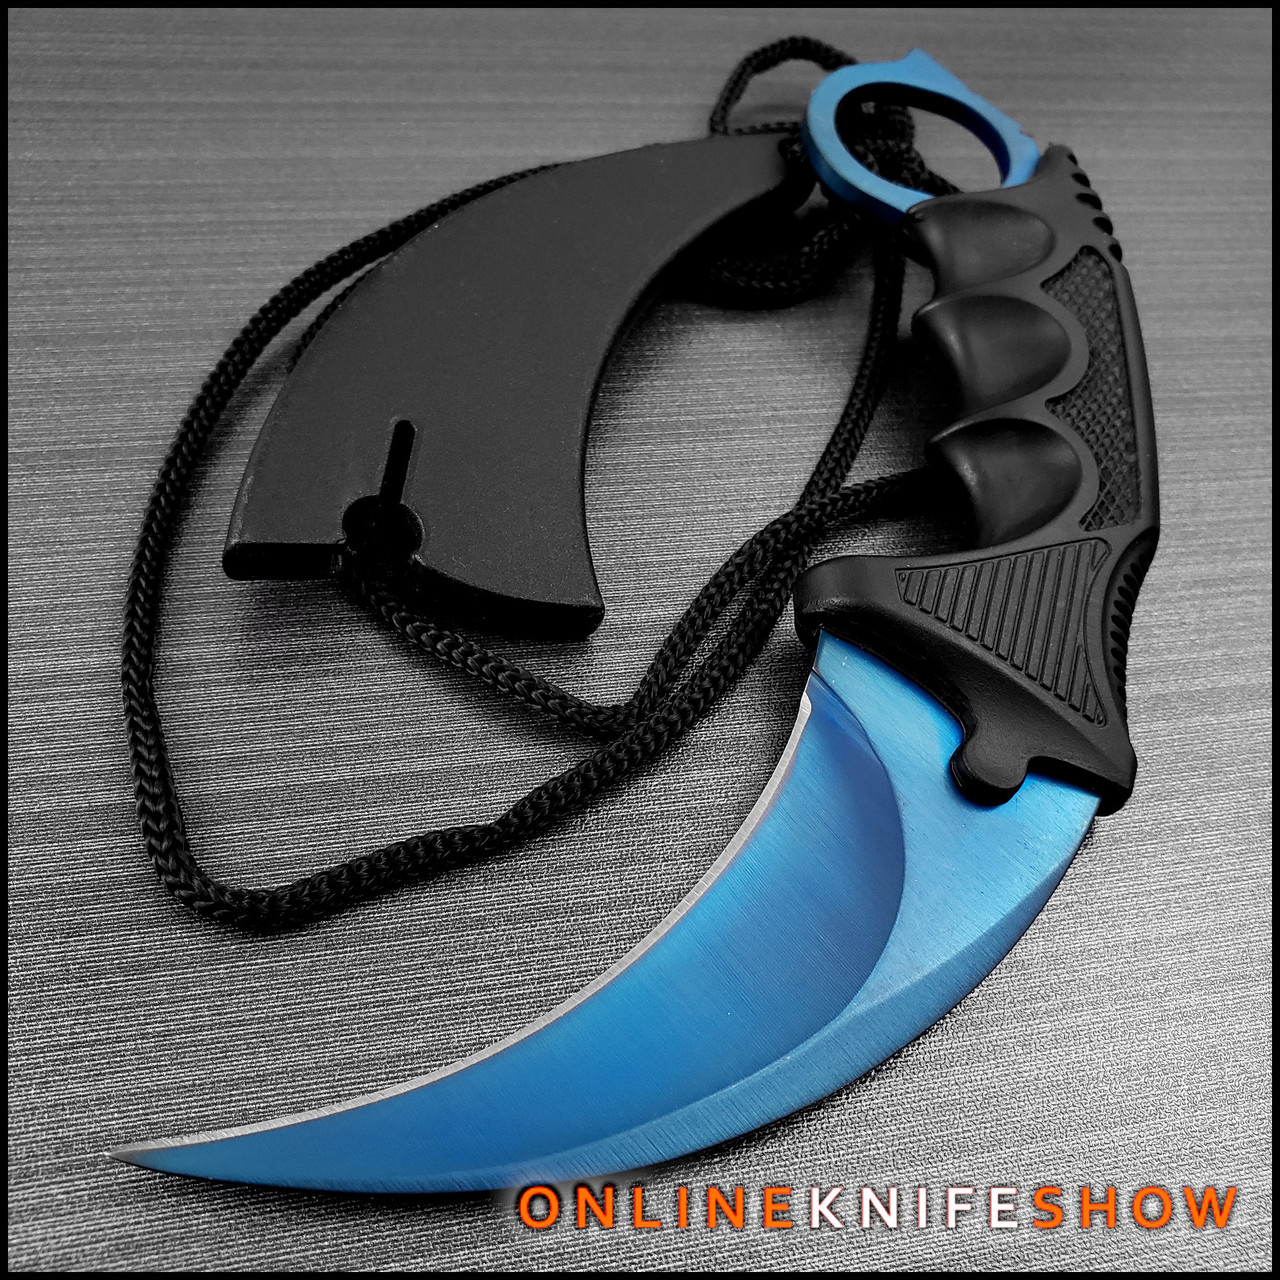 Karambit Knife Blue Steel Blade CSGO with Necklace Sheath